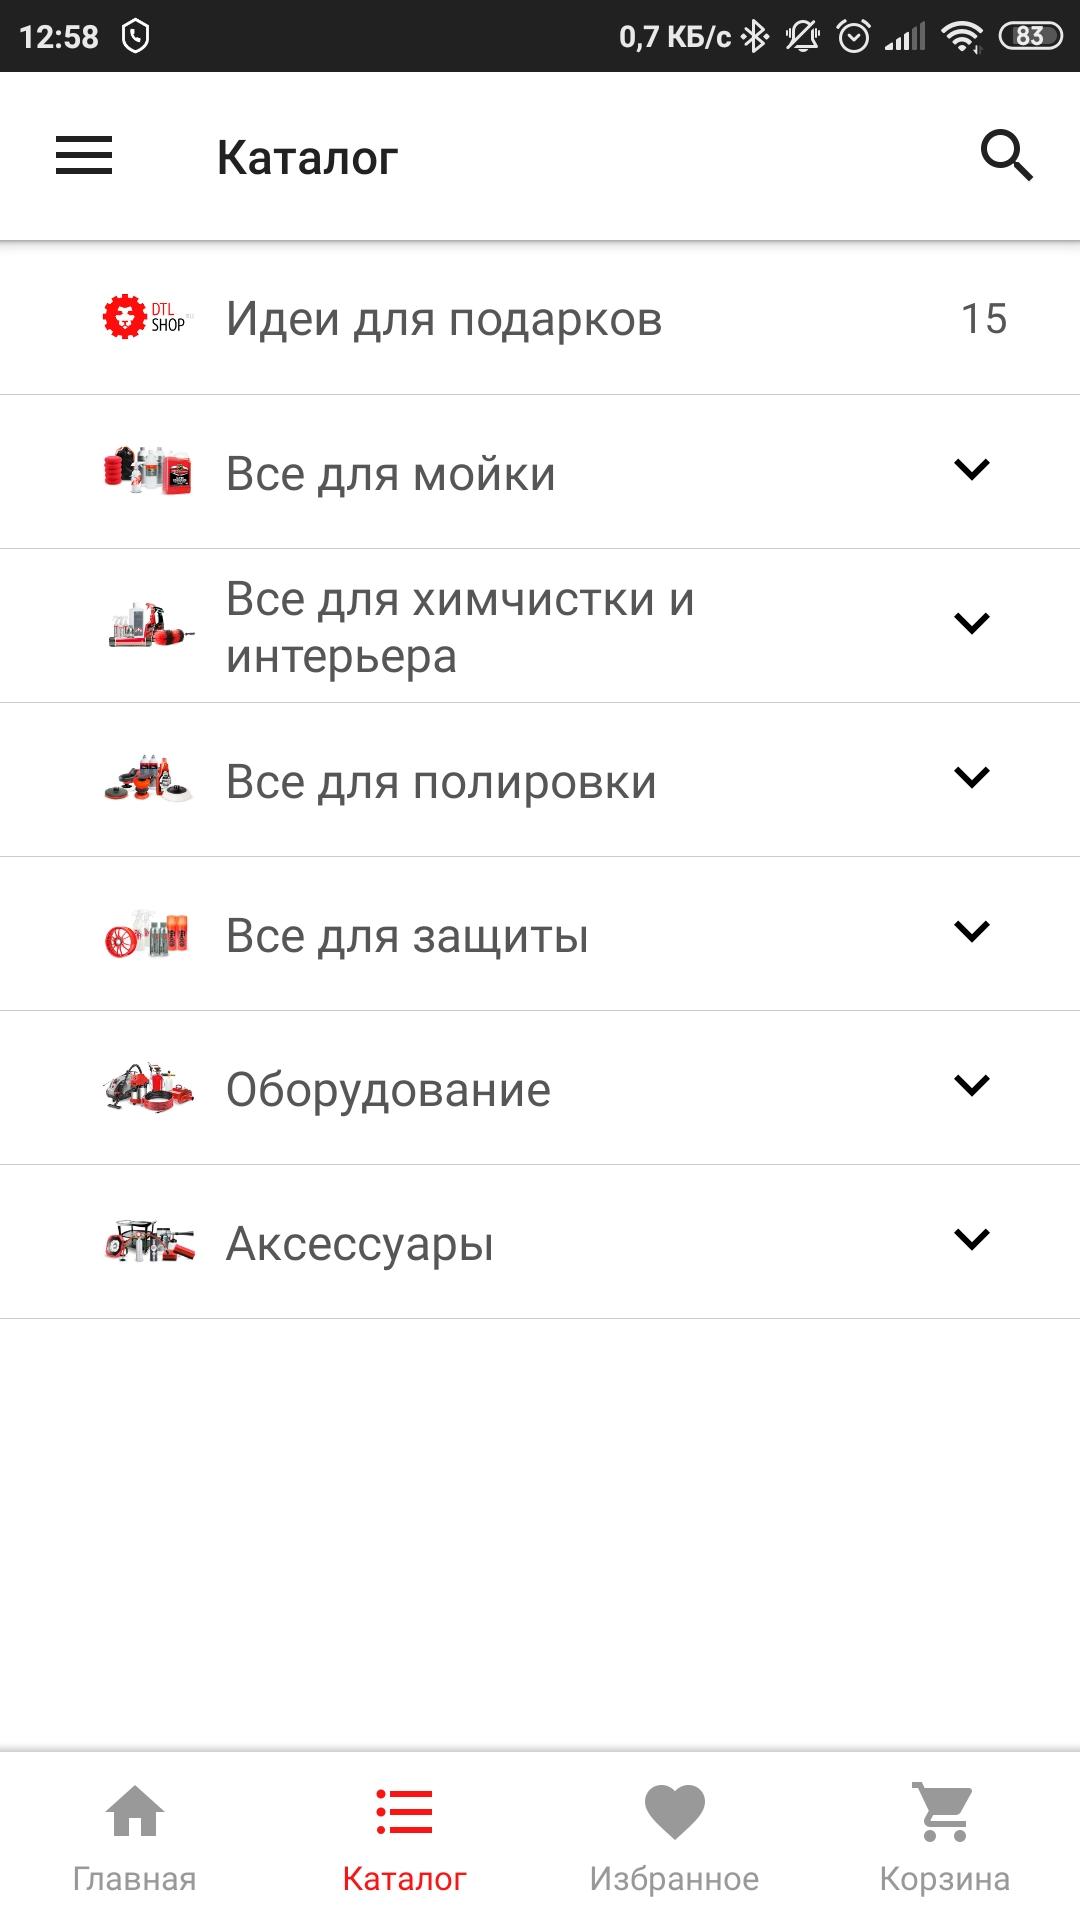 DTLshop.ru - detaling market 4.177.A.0 Screenshot 3